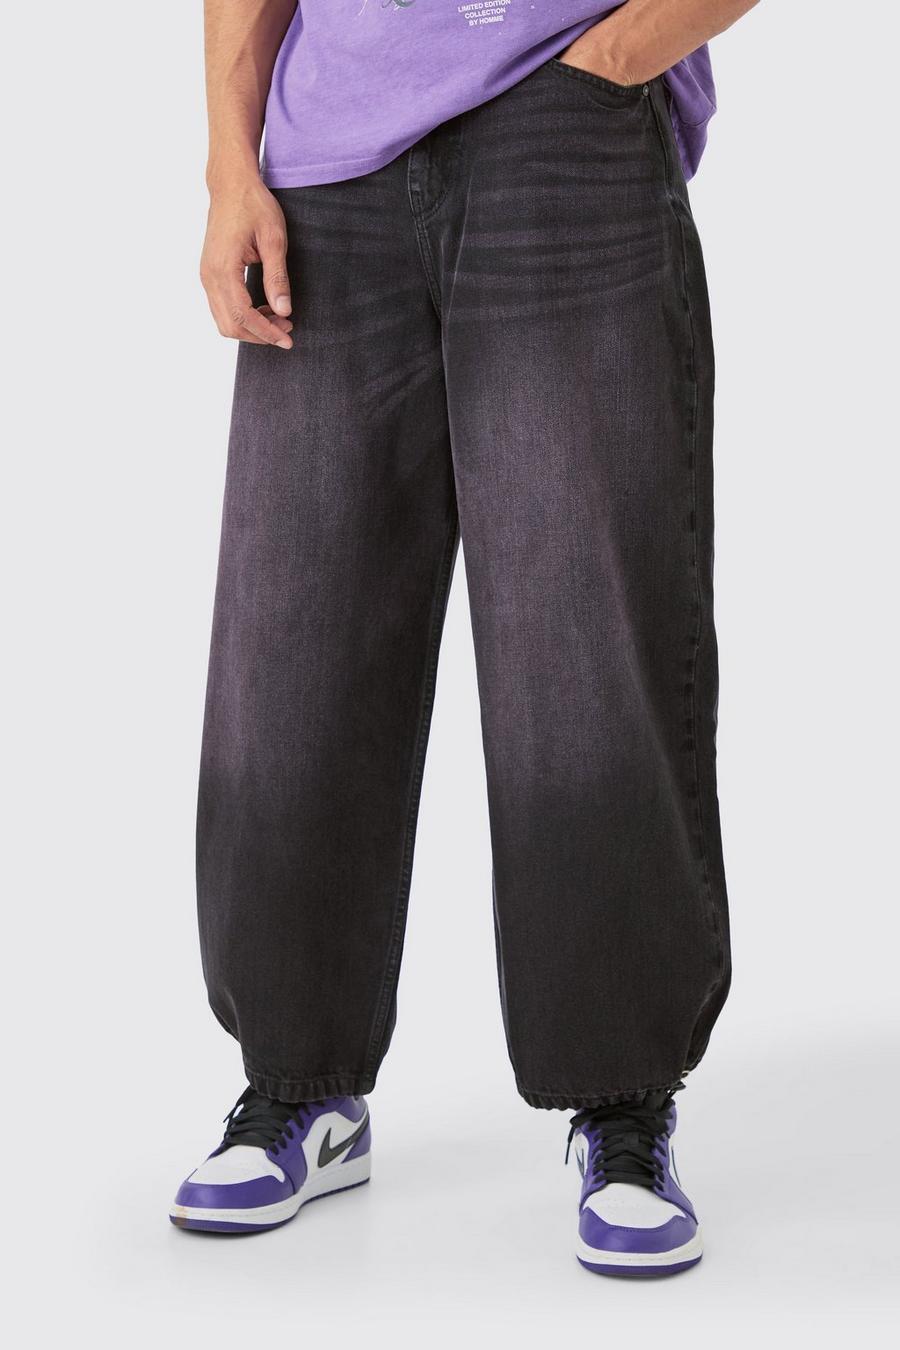 Purple Zwarte Paarse Parachute Jeans